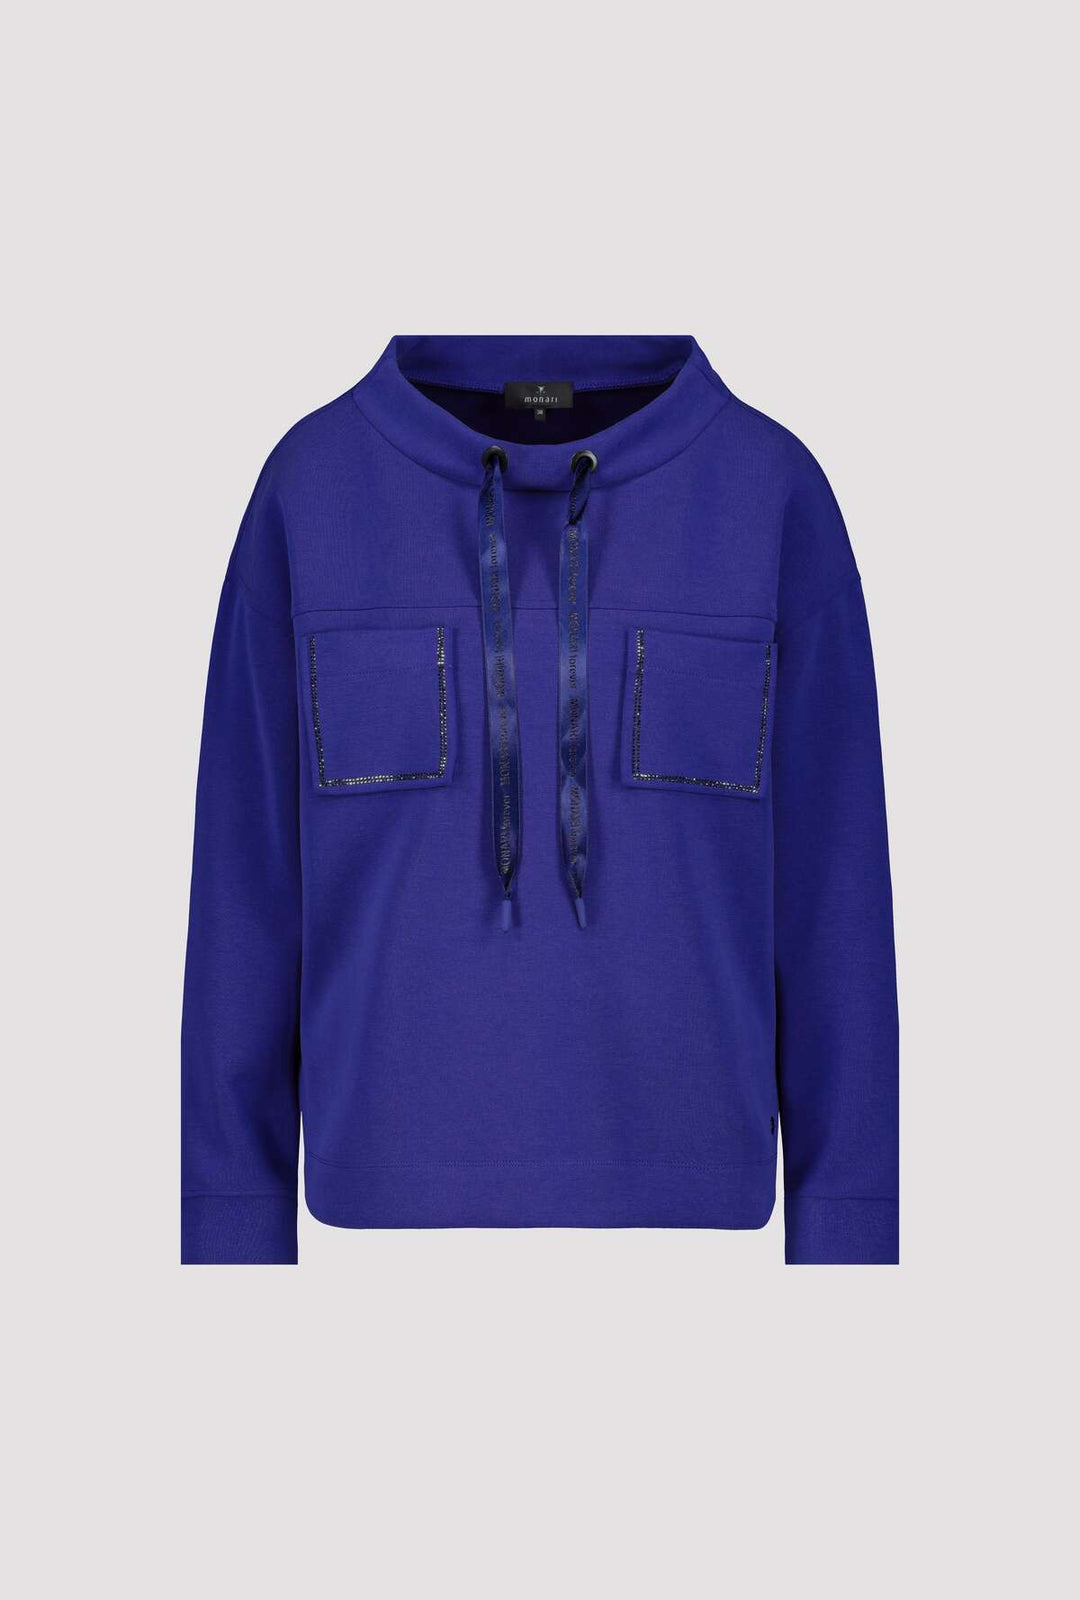 Monari 806748 Royal Blue Stand Up Collar Sweatshirt | Dotique